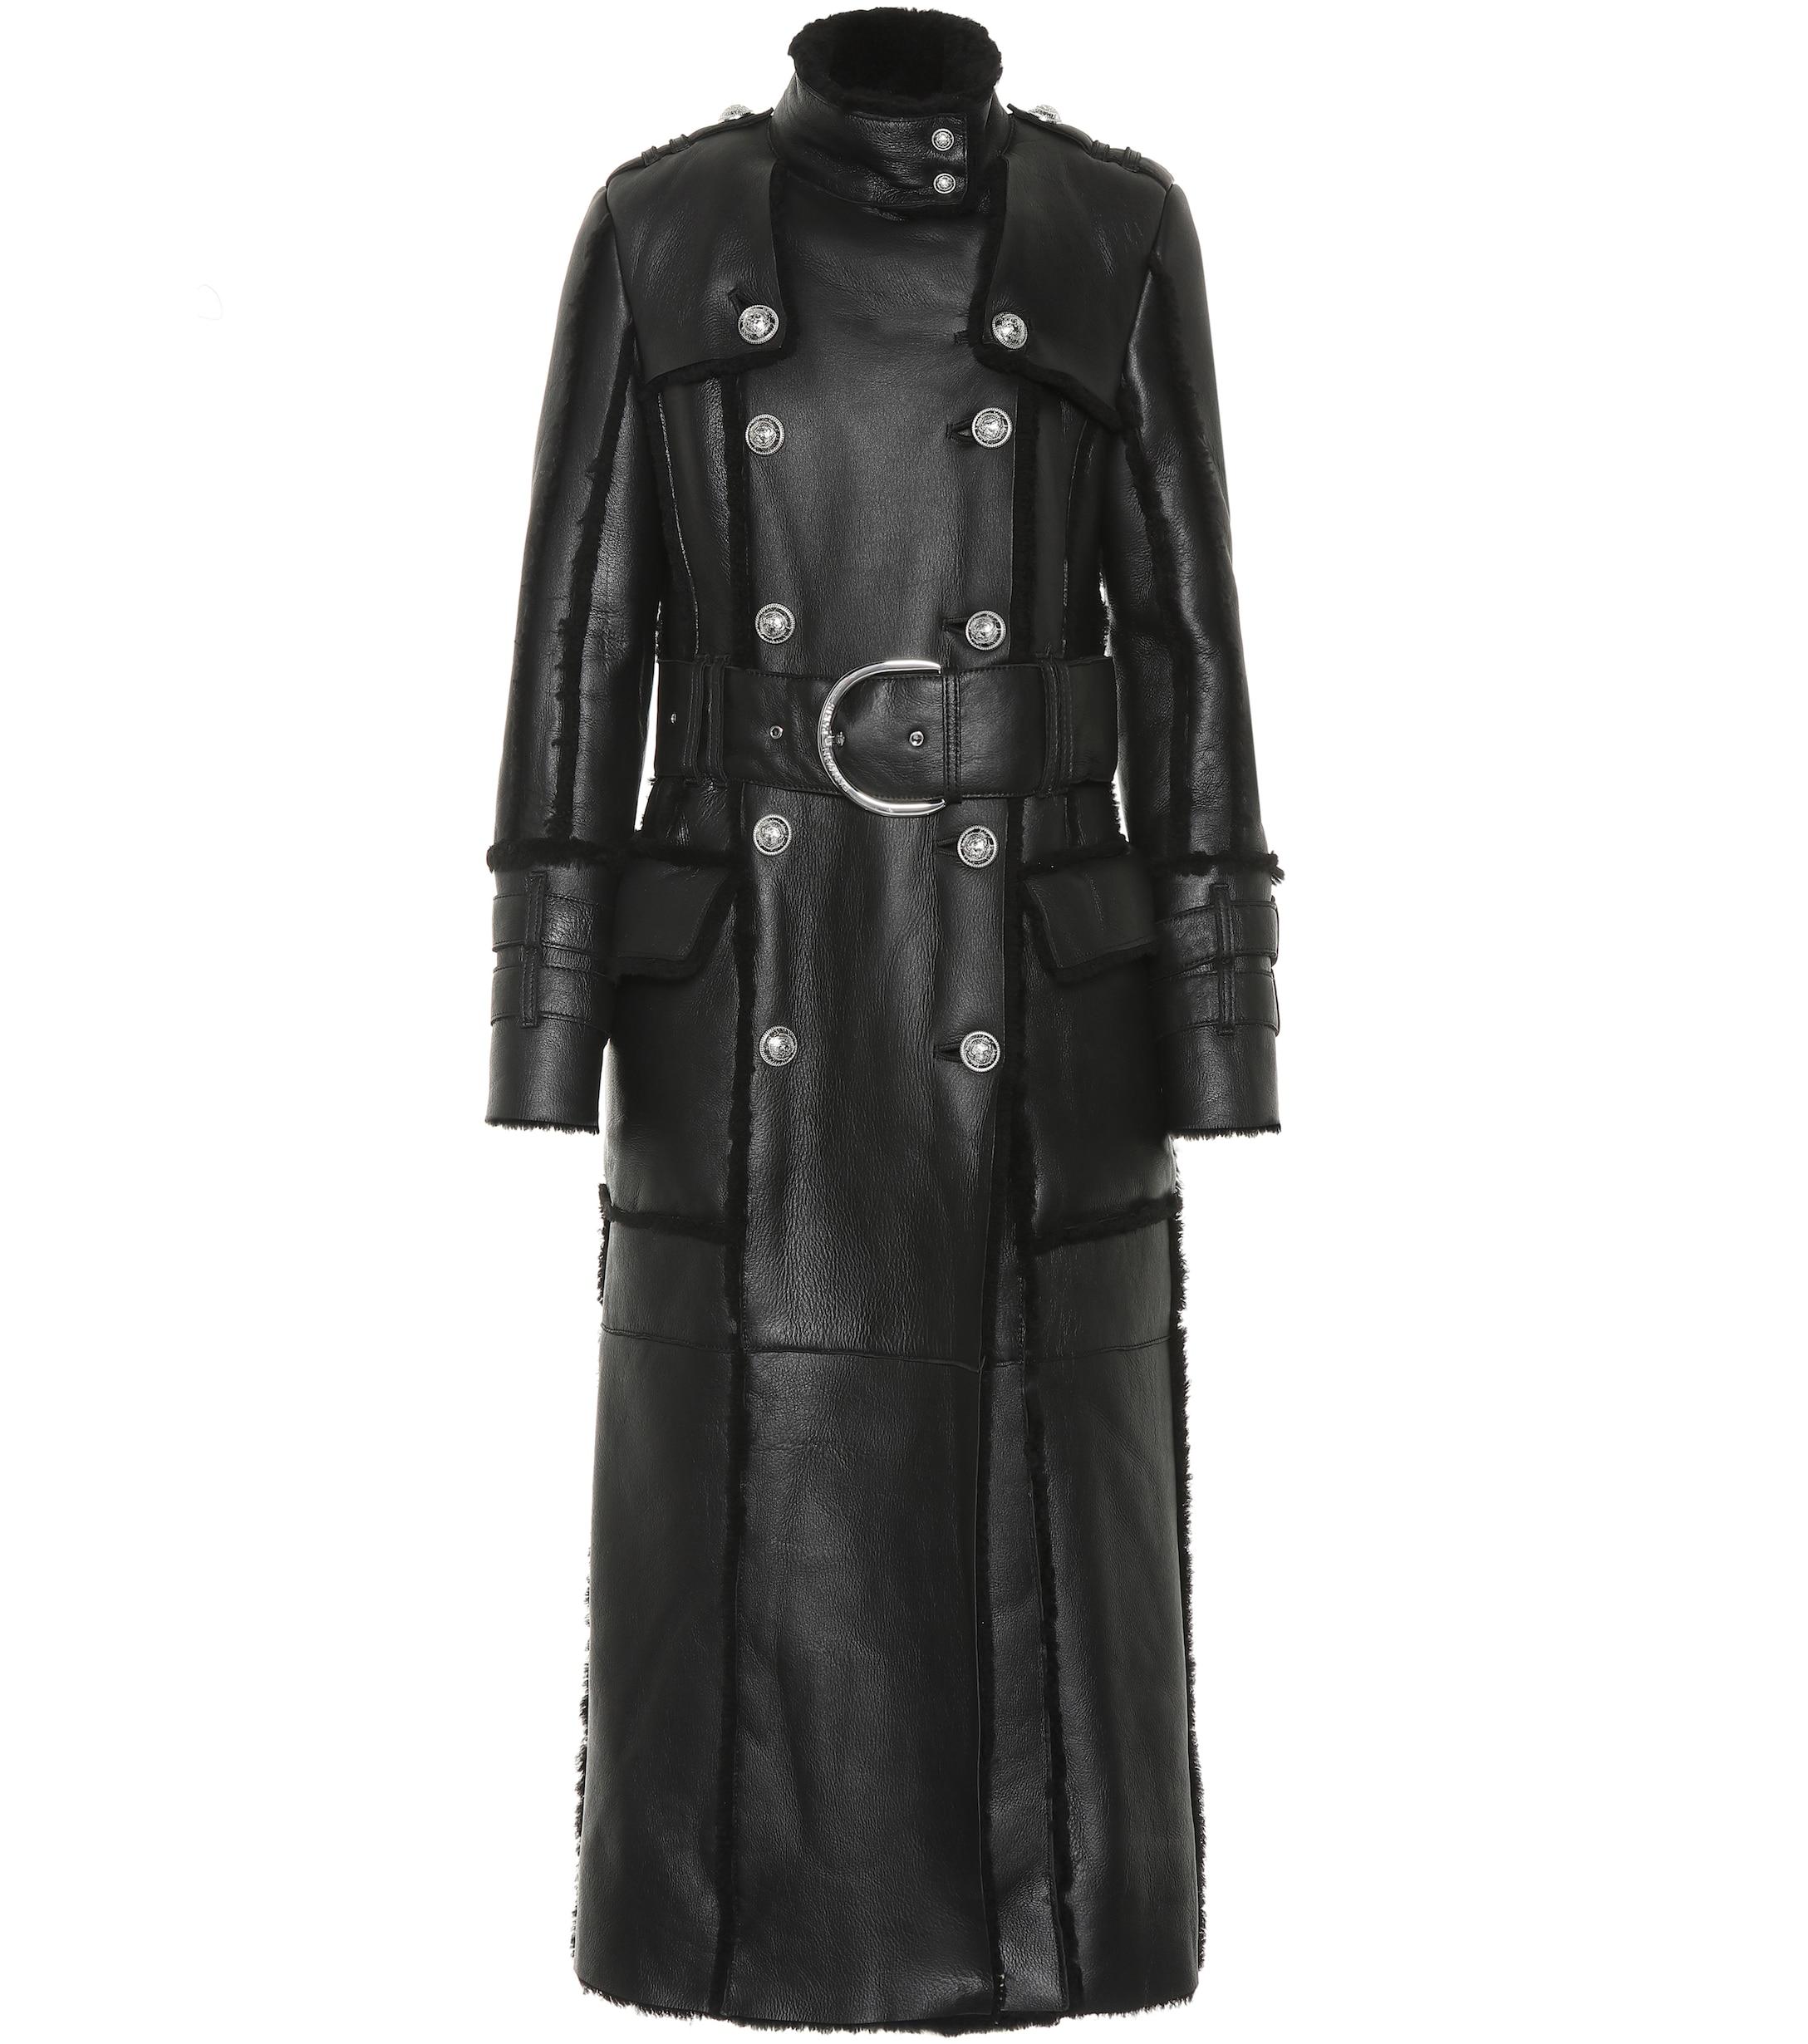 Balmain Leather Shearling Coat in Black - Lyst